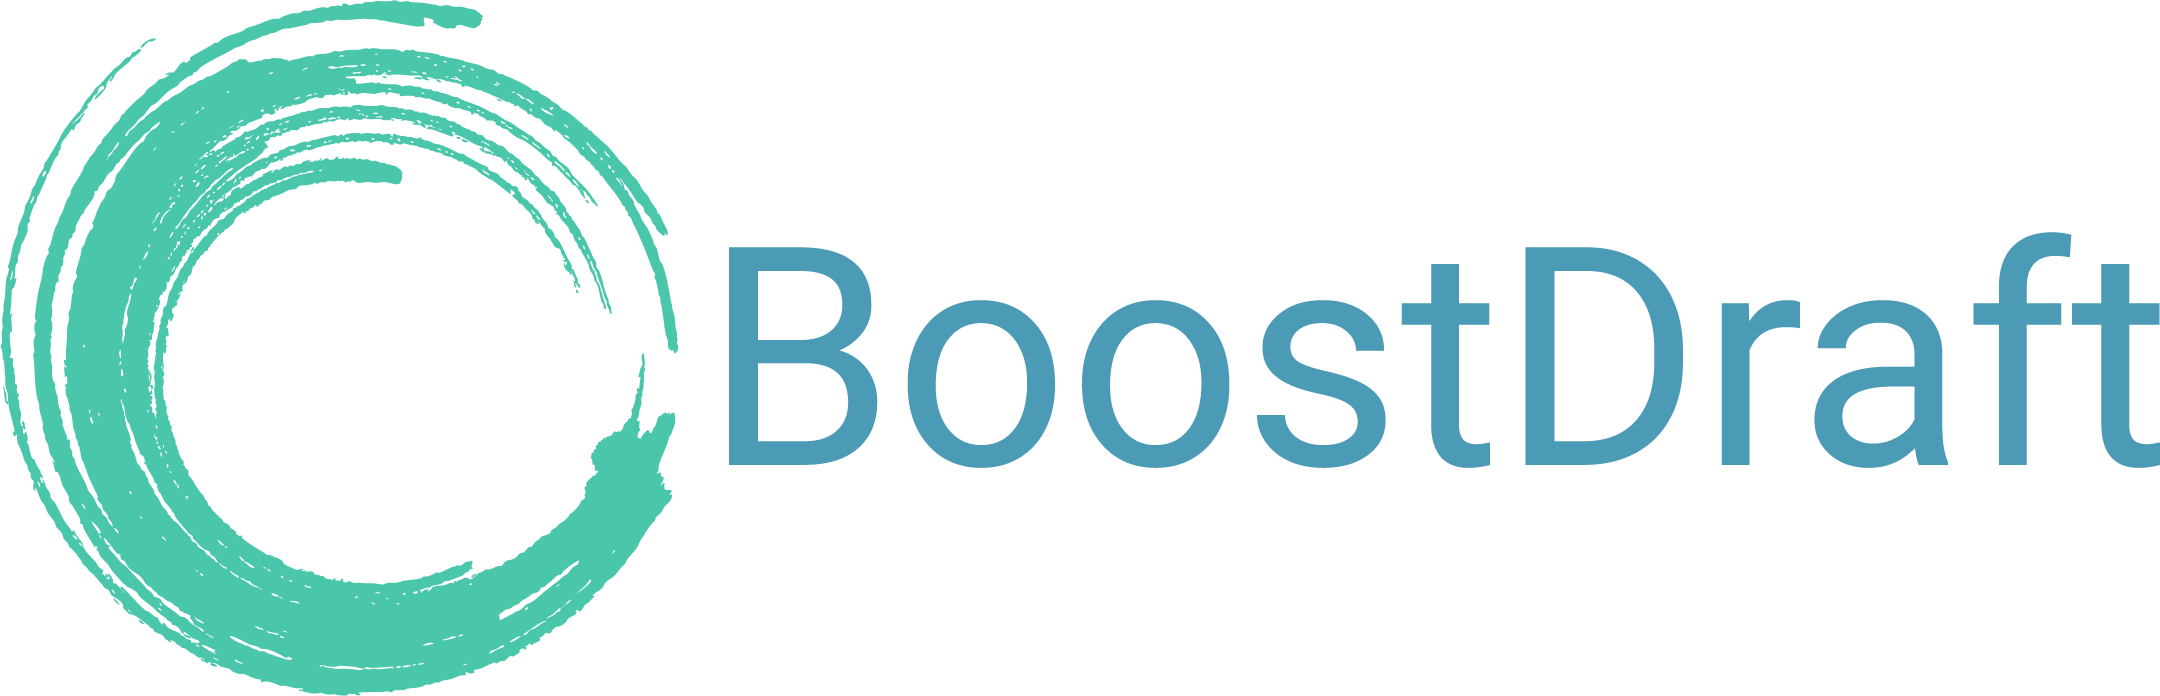 BoostDraft logo